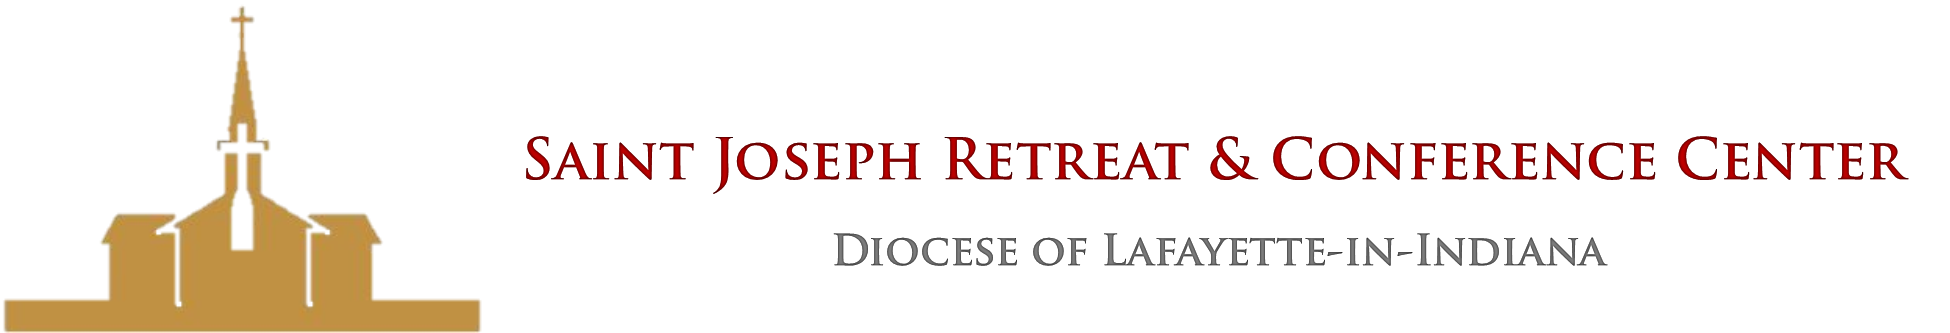 St. Joseph Retreat & Conference Center logo